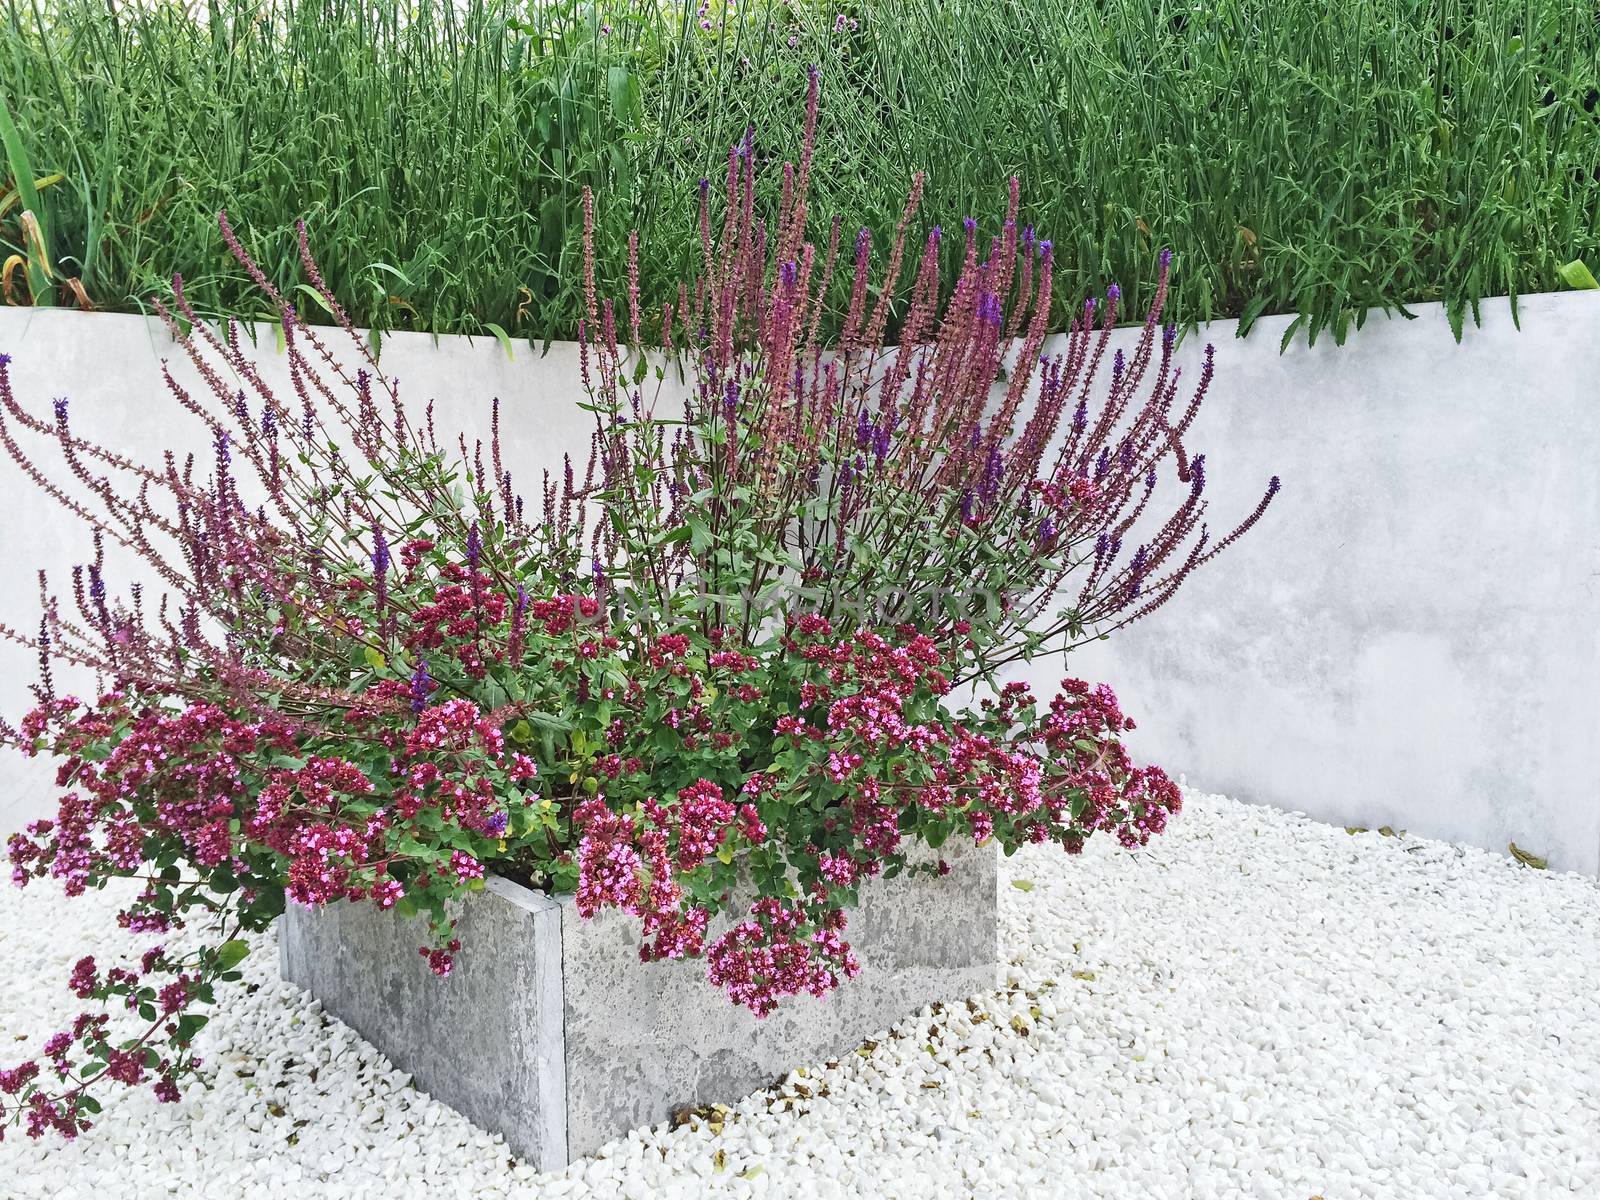 Flowerbed with purple flowers by anikasalsera